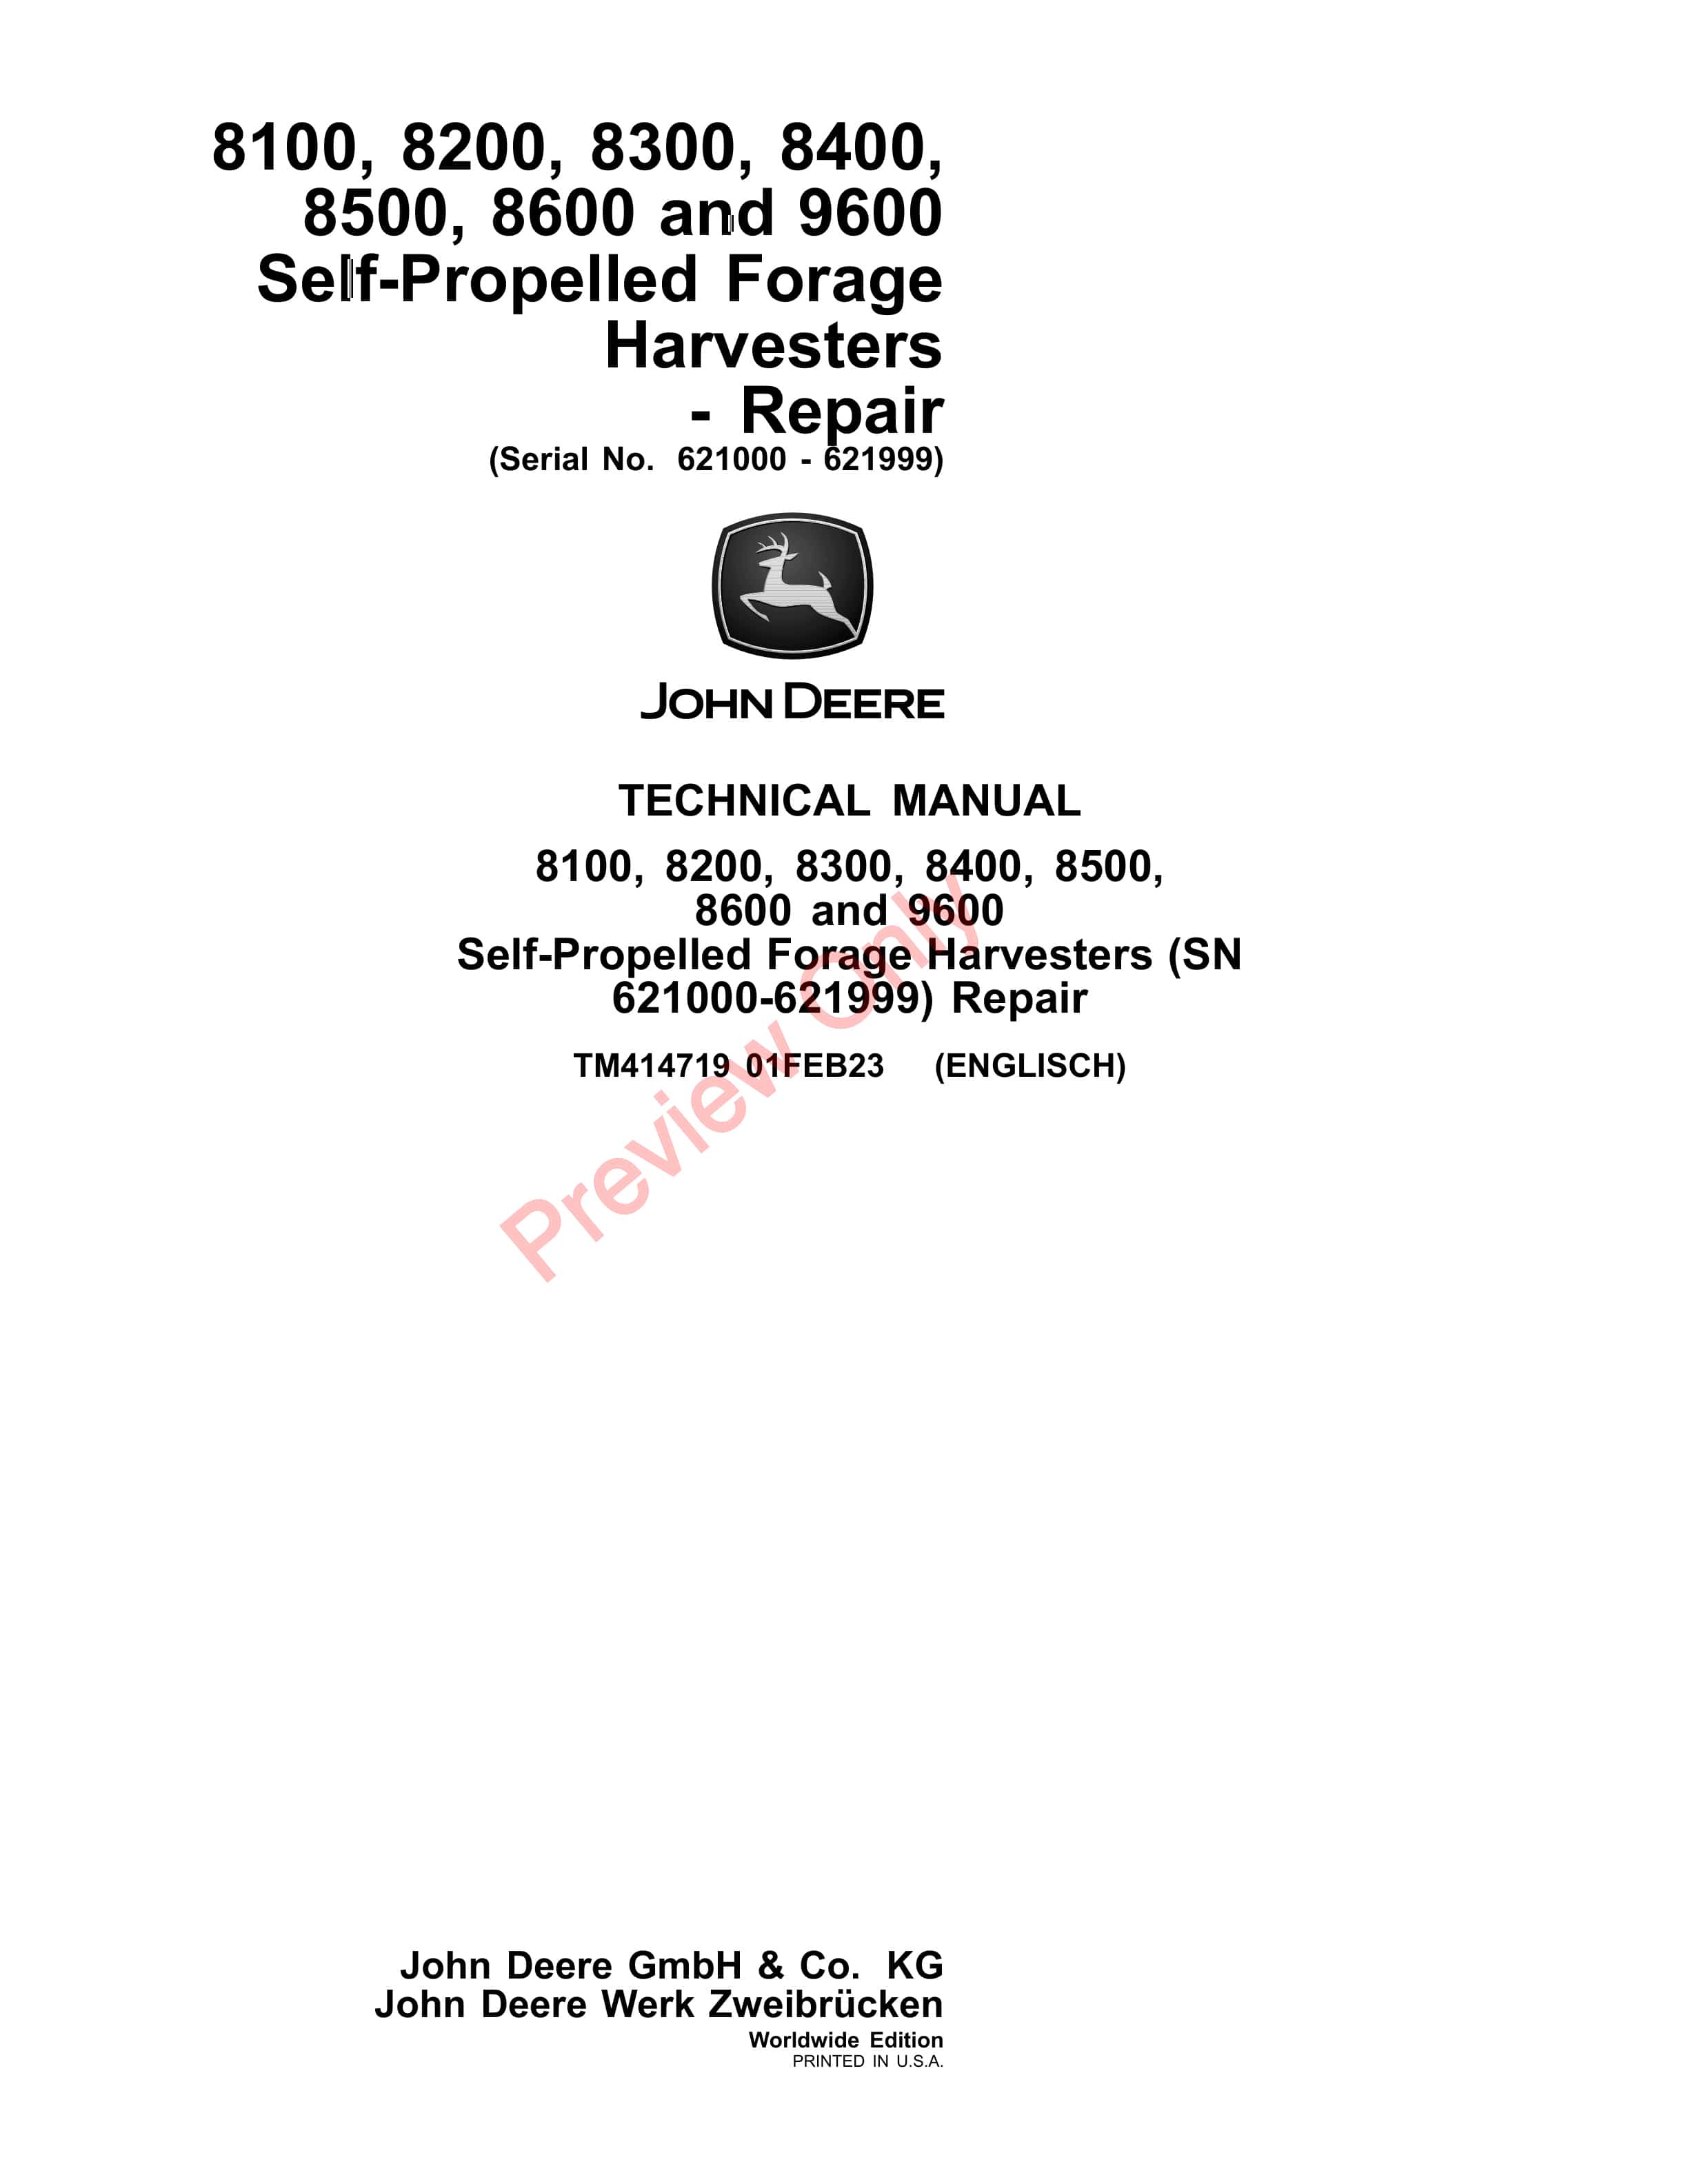 John Deere 8100, 8200, 8300, 8400, 8500, 8600, and 9600 Self Technical Manual TM414719 01FEB23-1